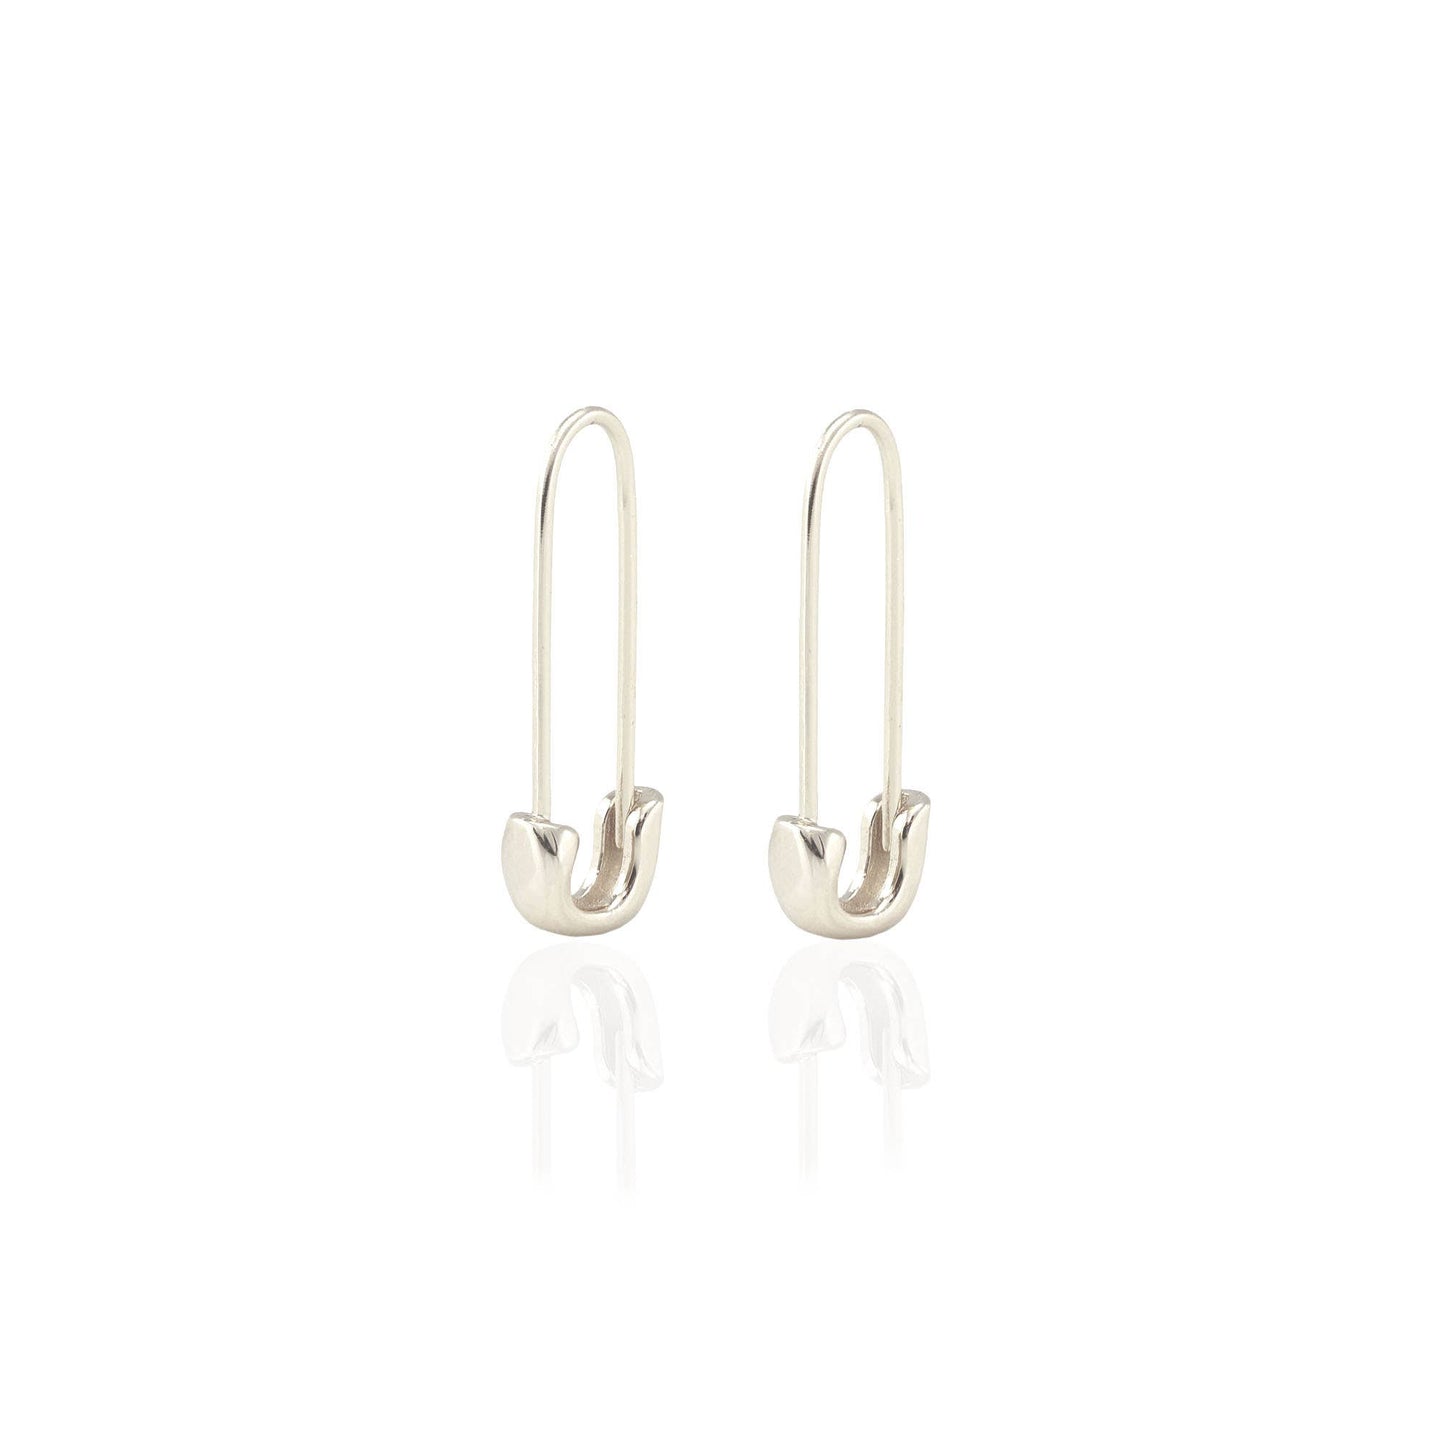 Safety Pin Hoop Earrings: Sterling Silver